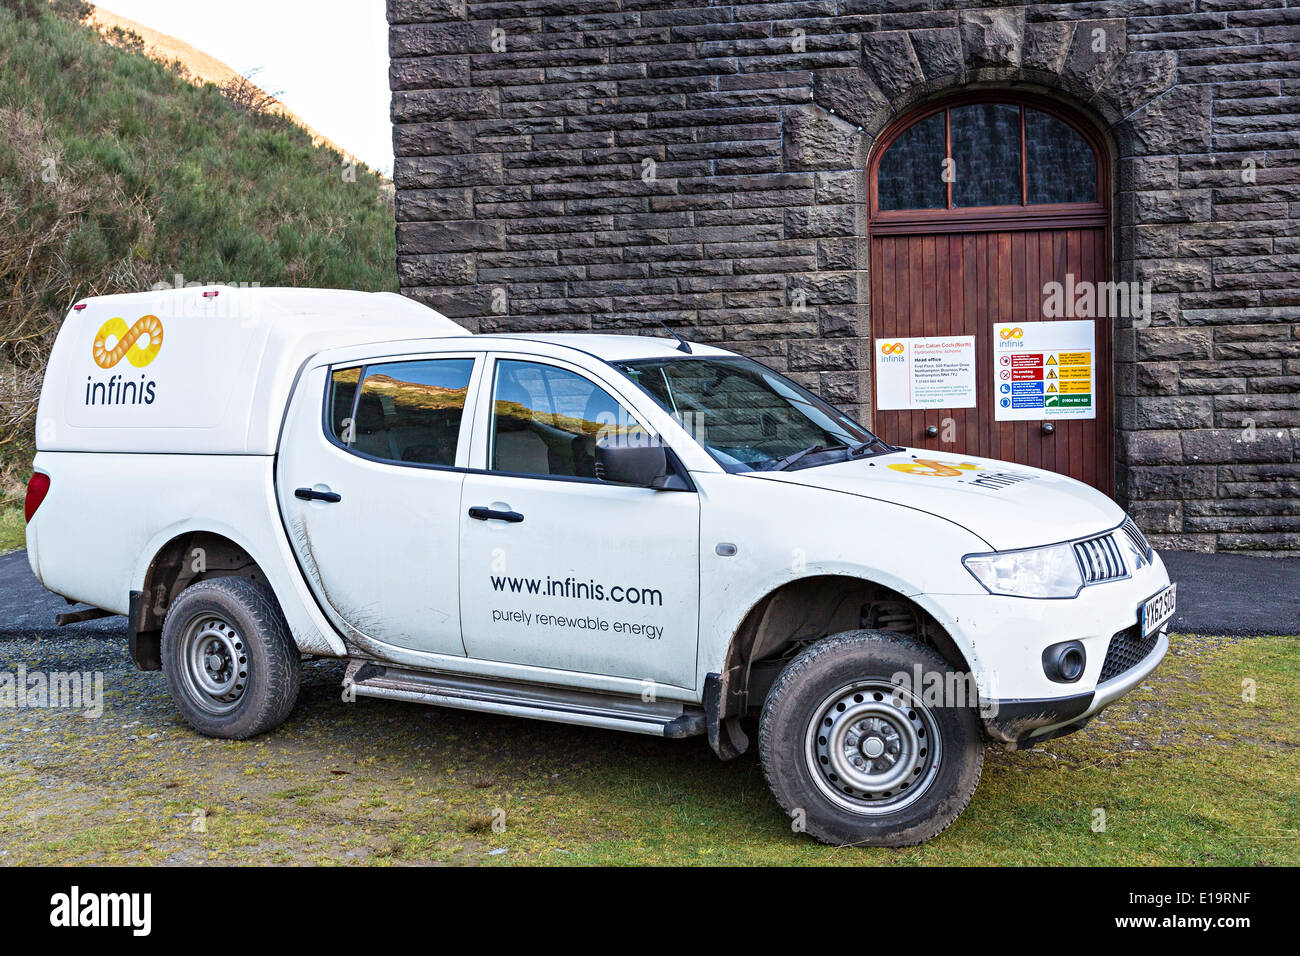 Infinitis renewable energy van at Elan Valley reservoir, Powys, Wales, UK Stock Photo